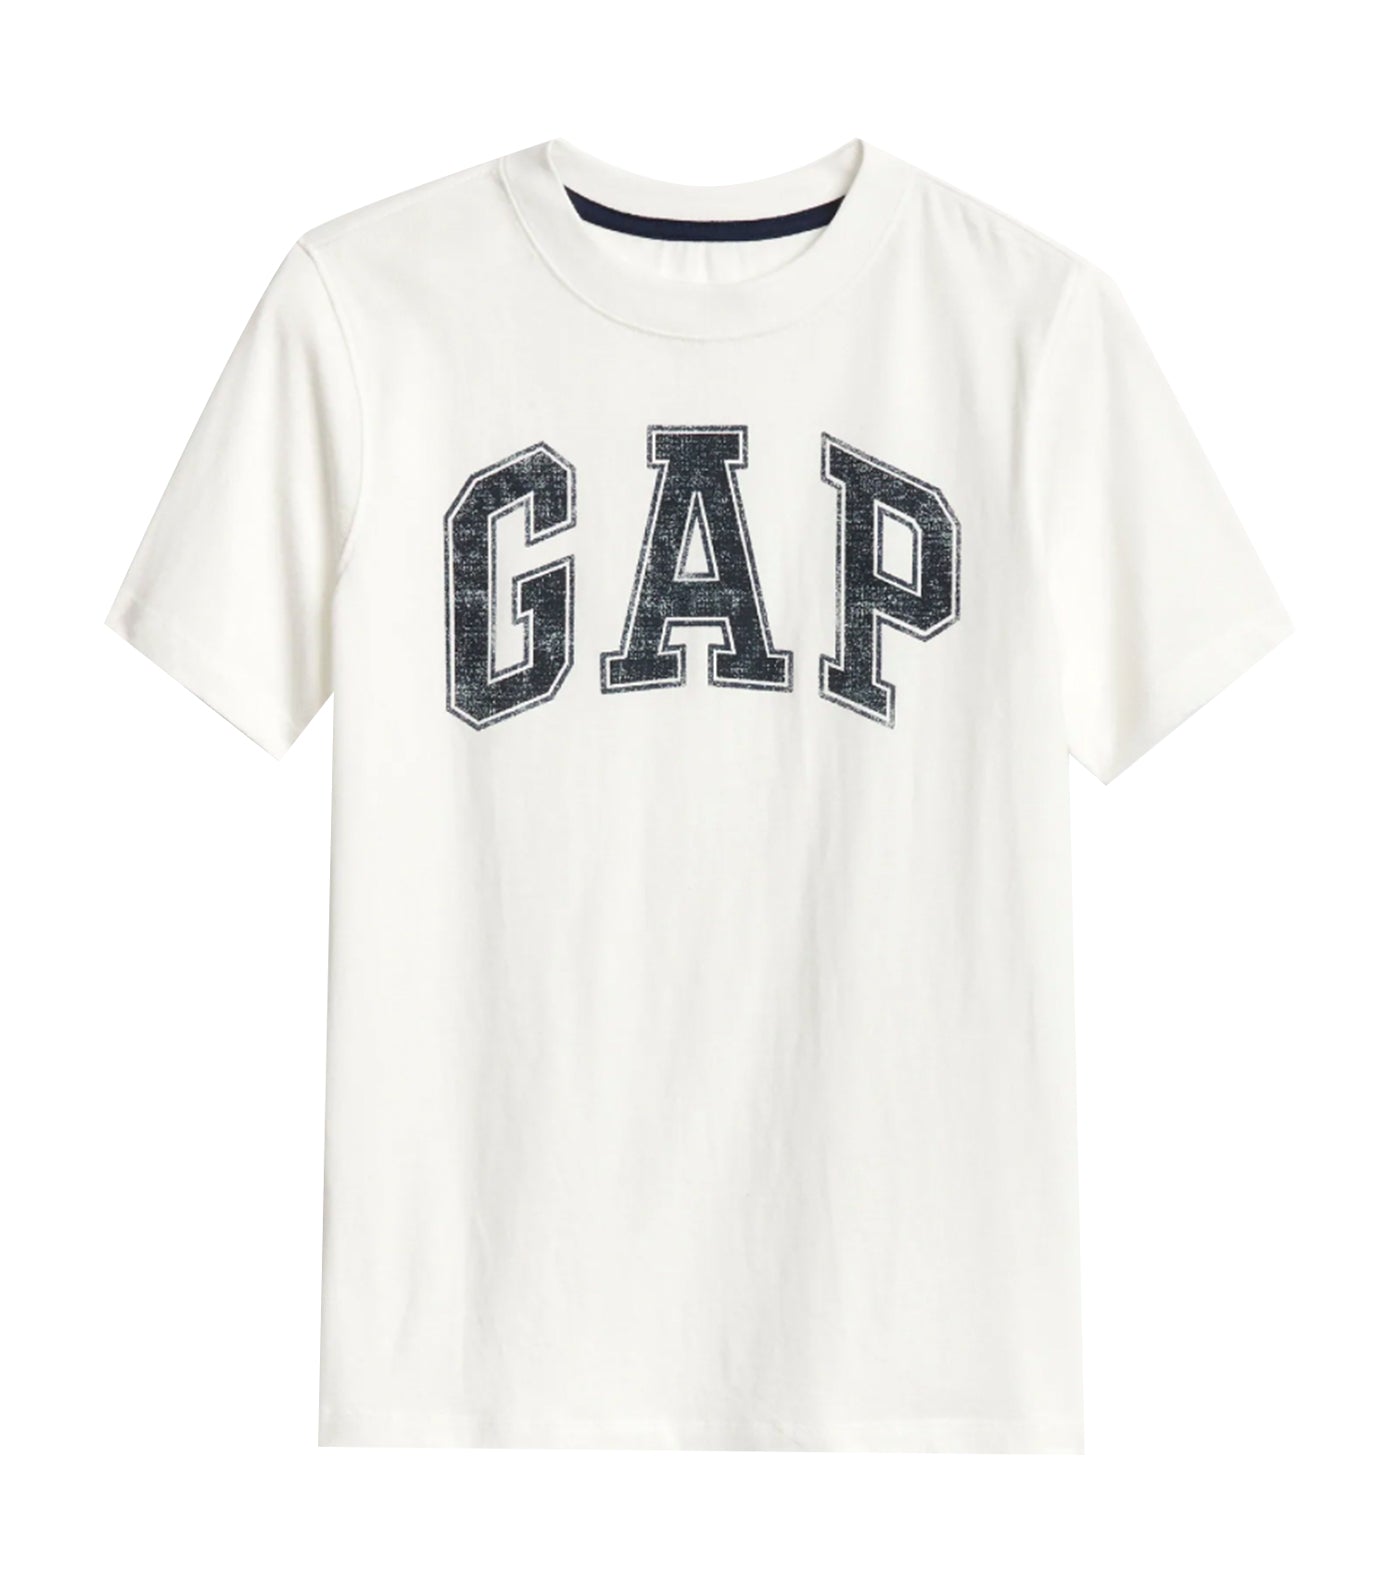 gap kids new off white gap logo t-shirt